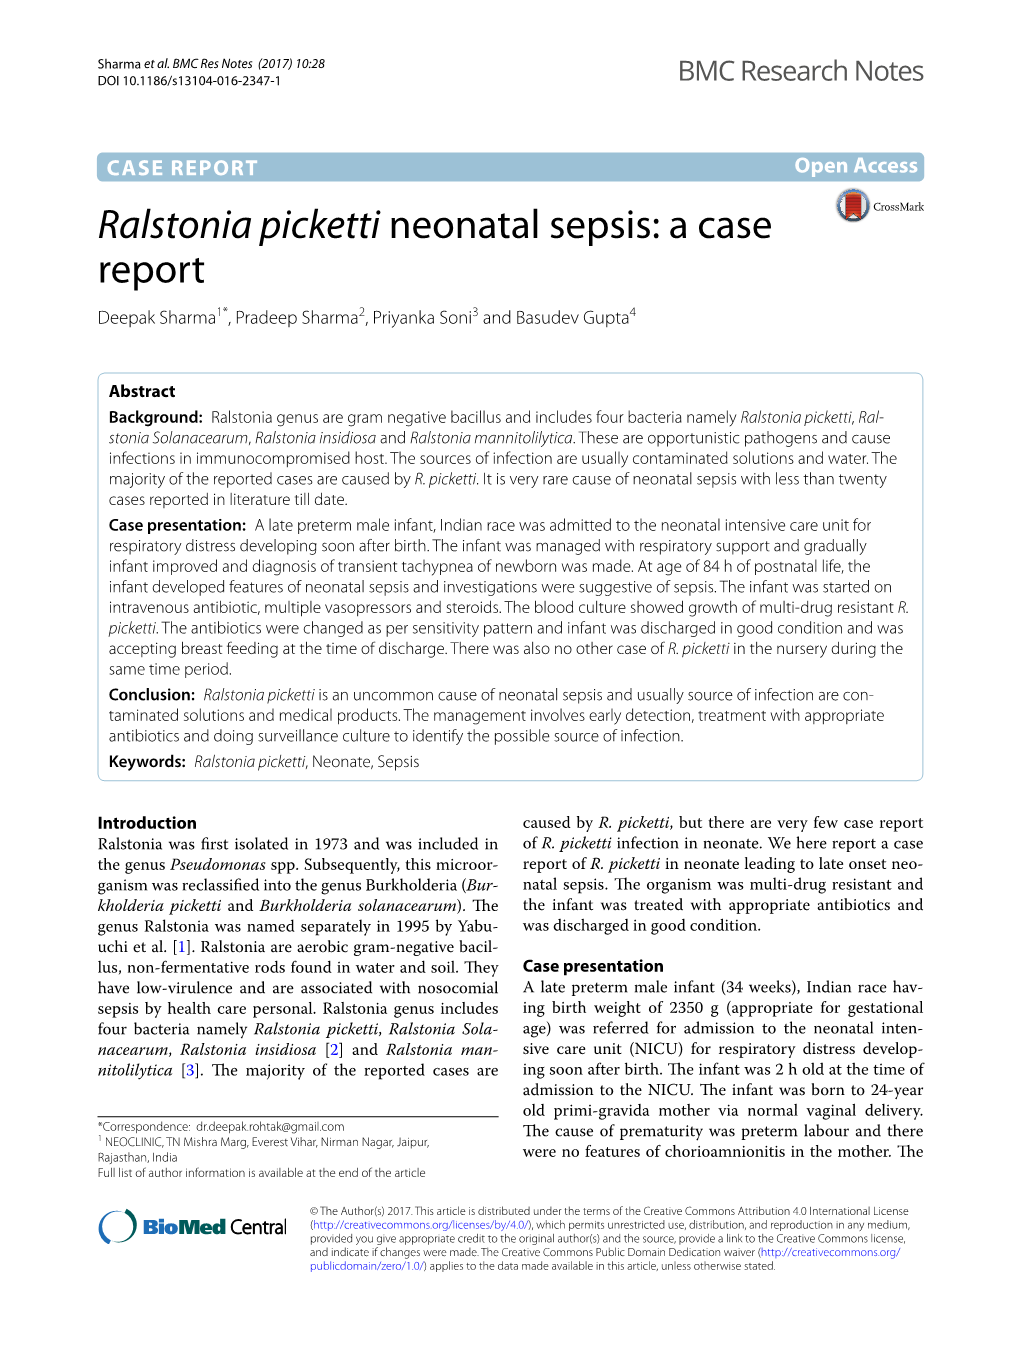 Ralstonia Picketti Neonatal Sepsis: a Case Report Deepak Sharma1*, Pradeep Sharma2, Priyanka Soni3 and Basudev Gupta4